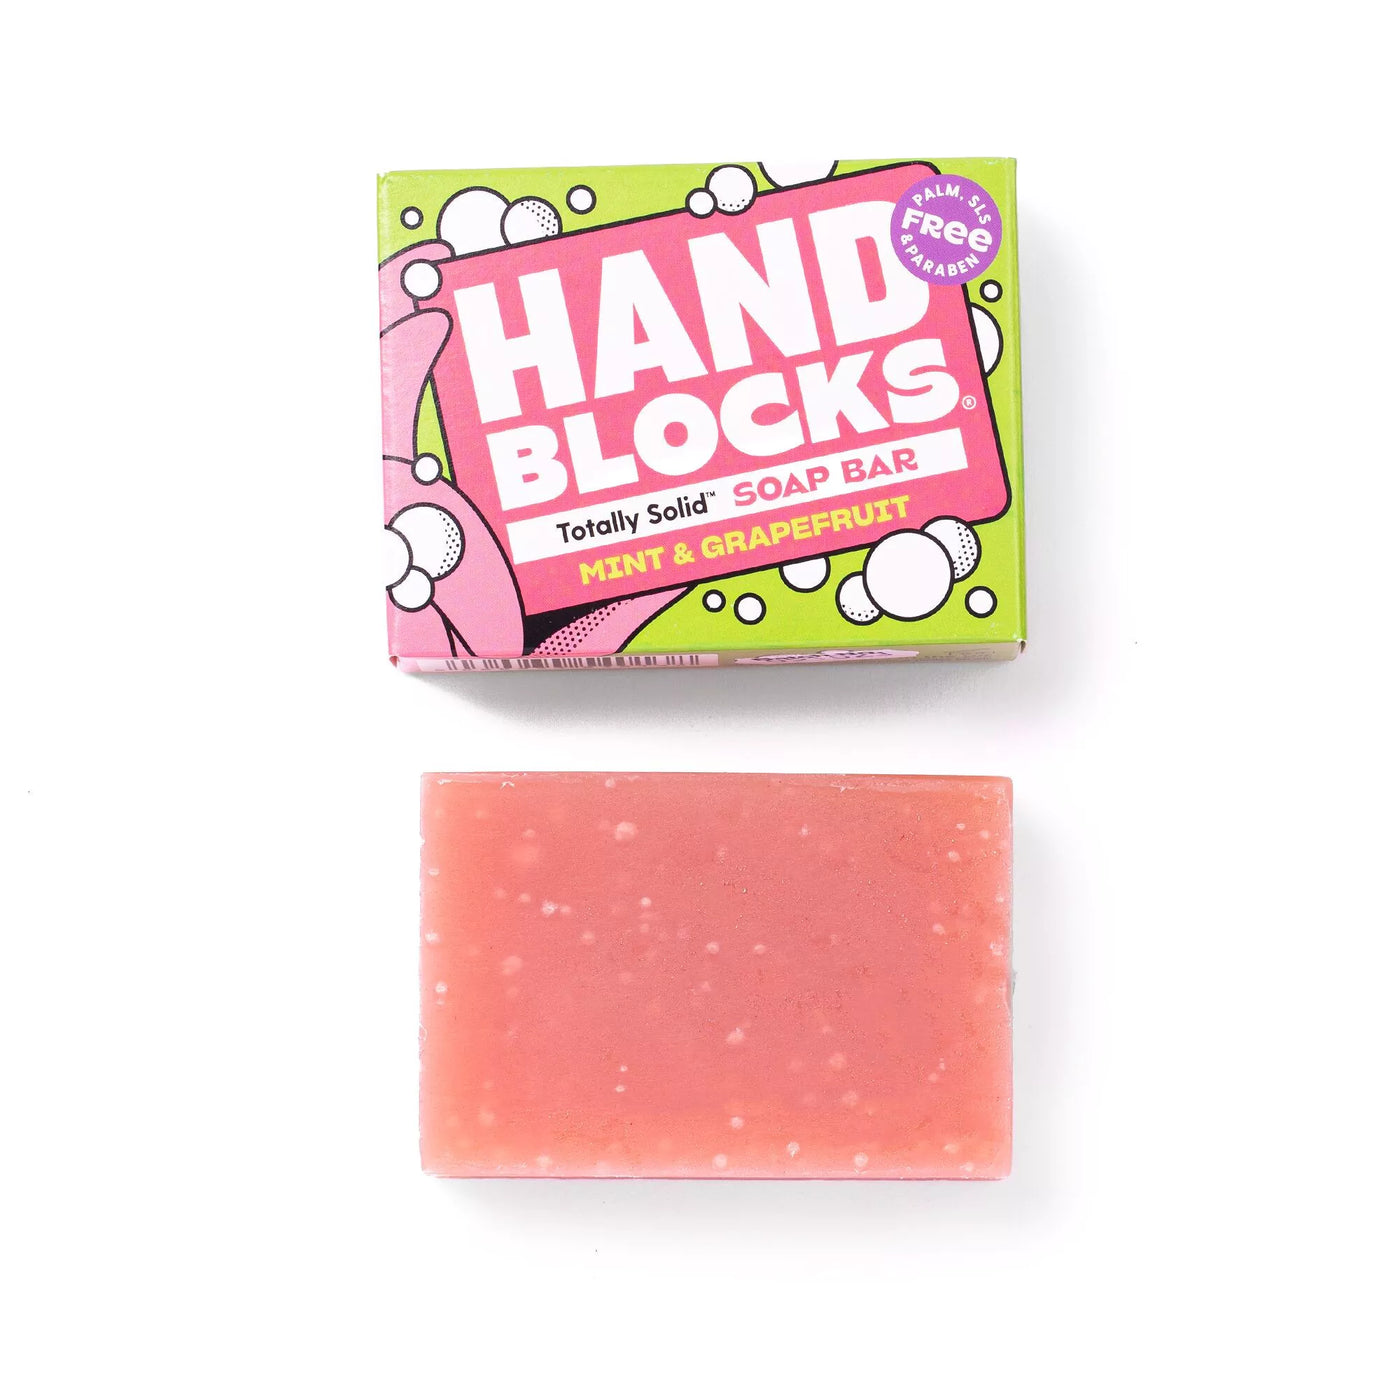 Hand Blocks Soap by Shower Blocks